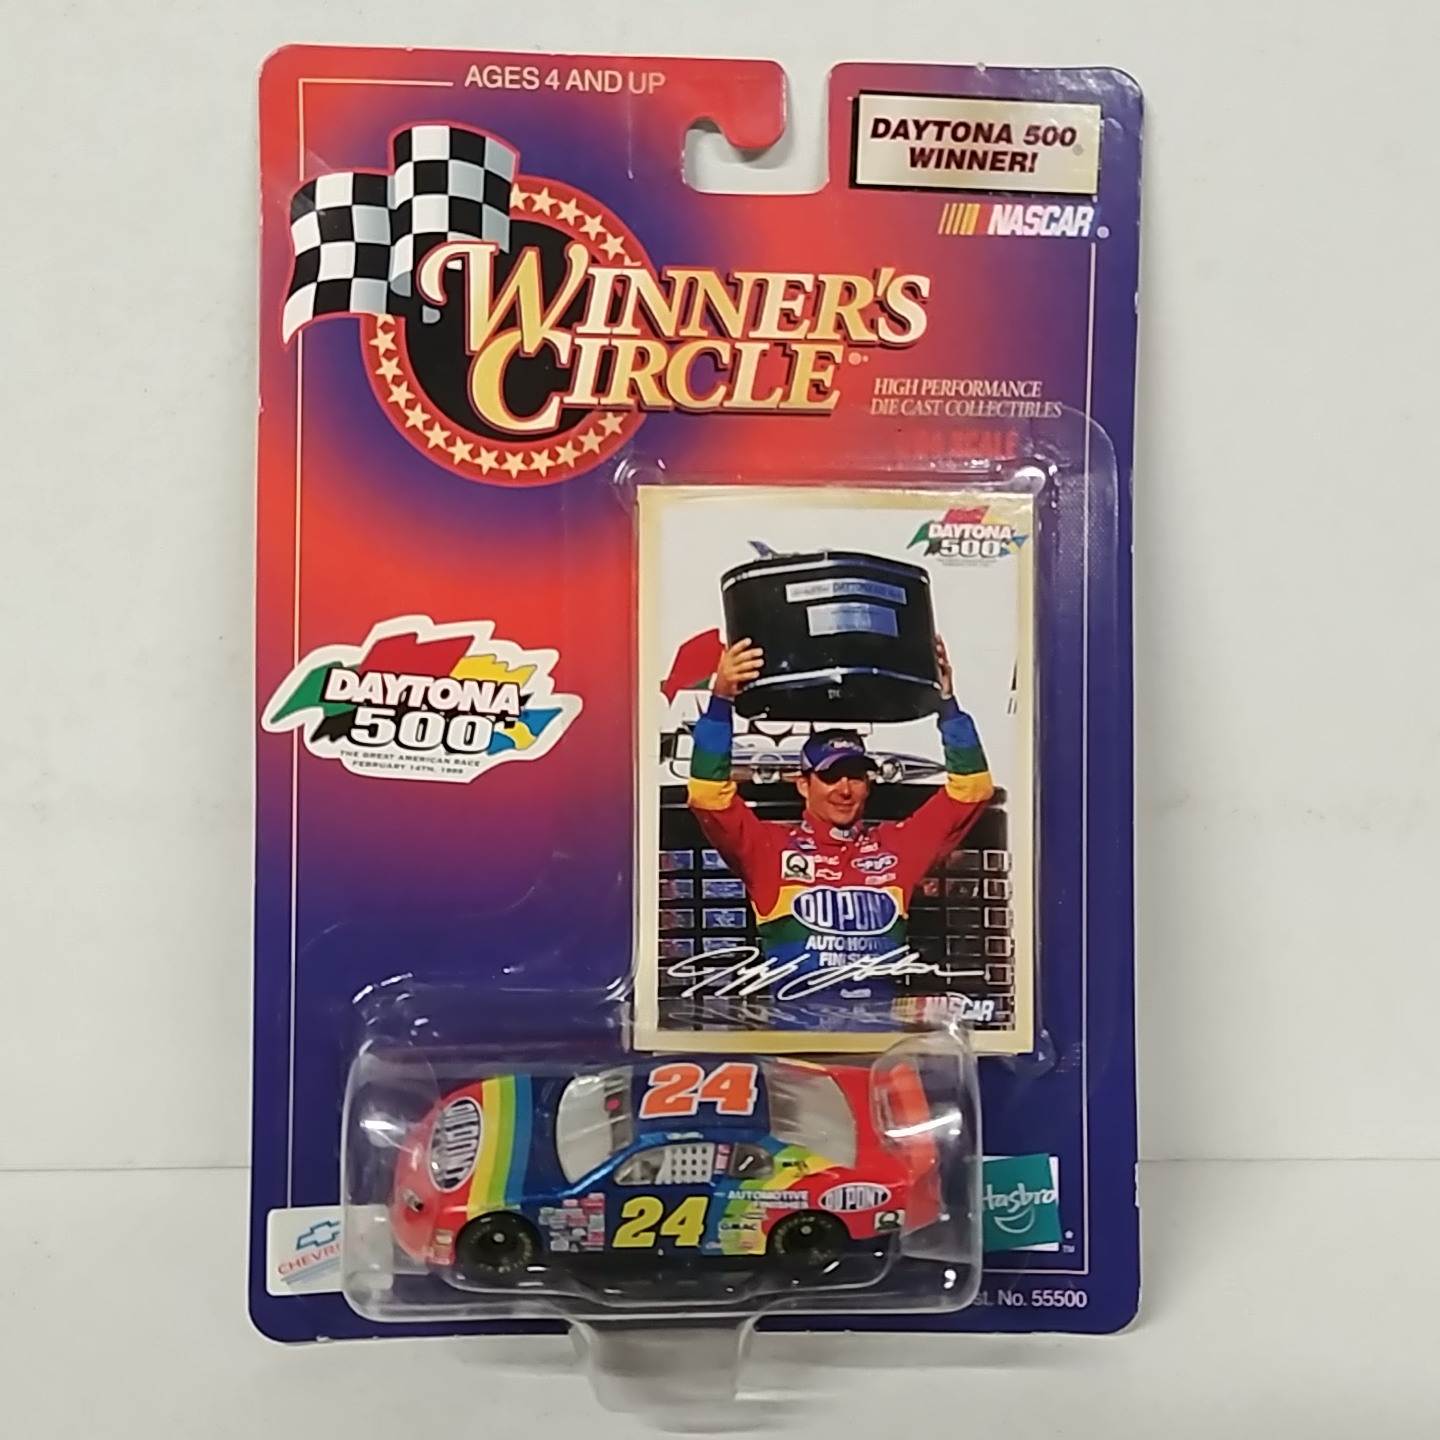 1999 Jeff Gordon 1/64th Dupont "Daytona 500 Winner" car